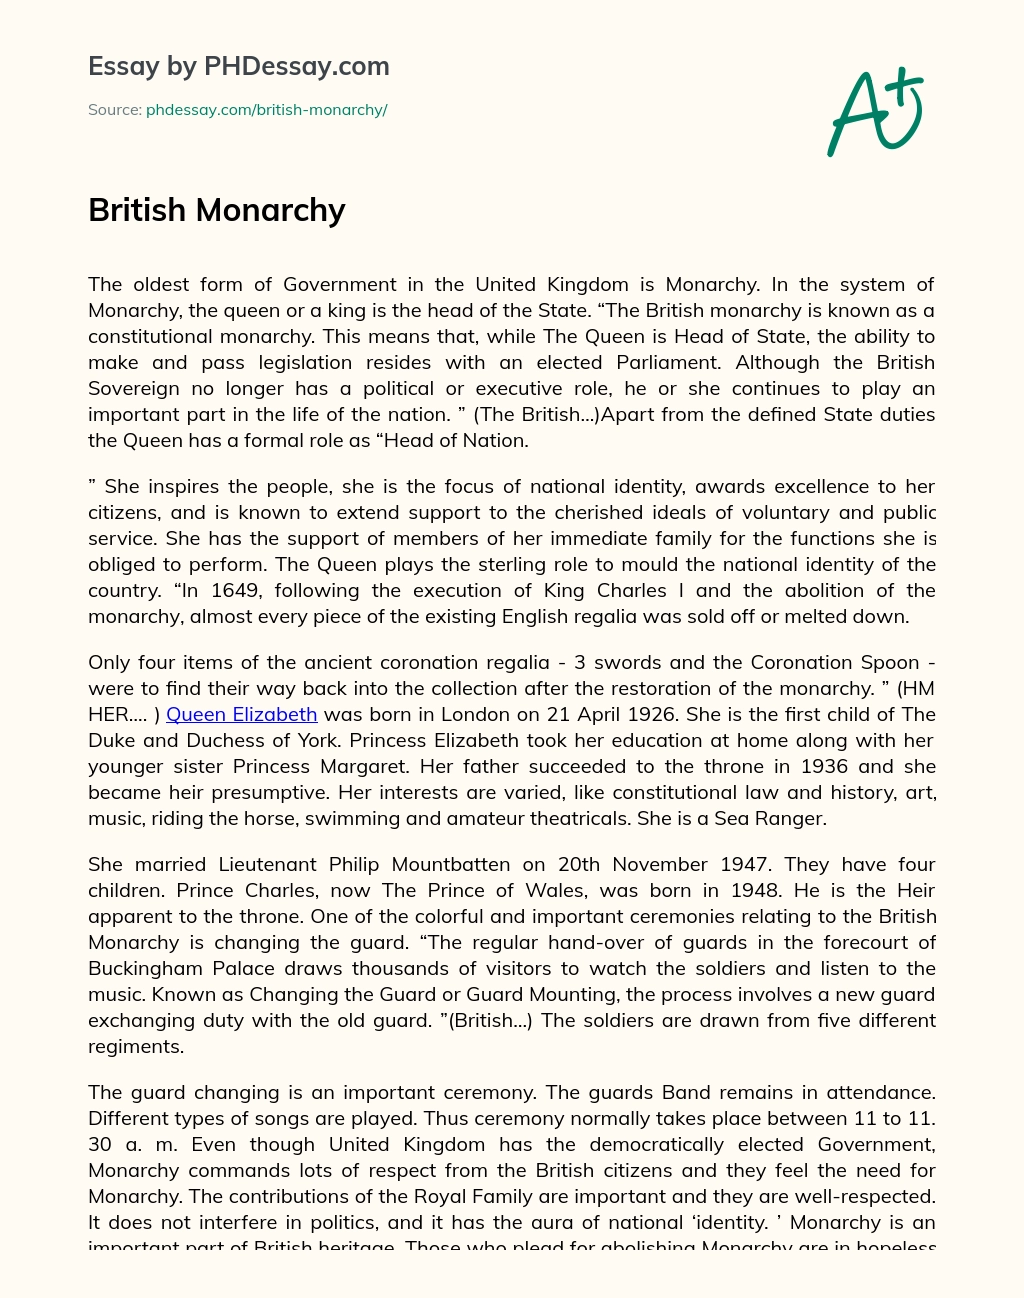 British Monarchy essay